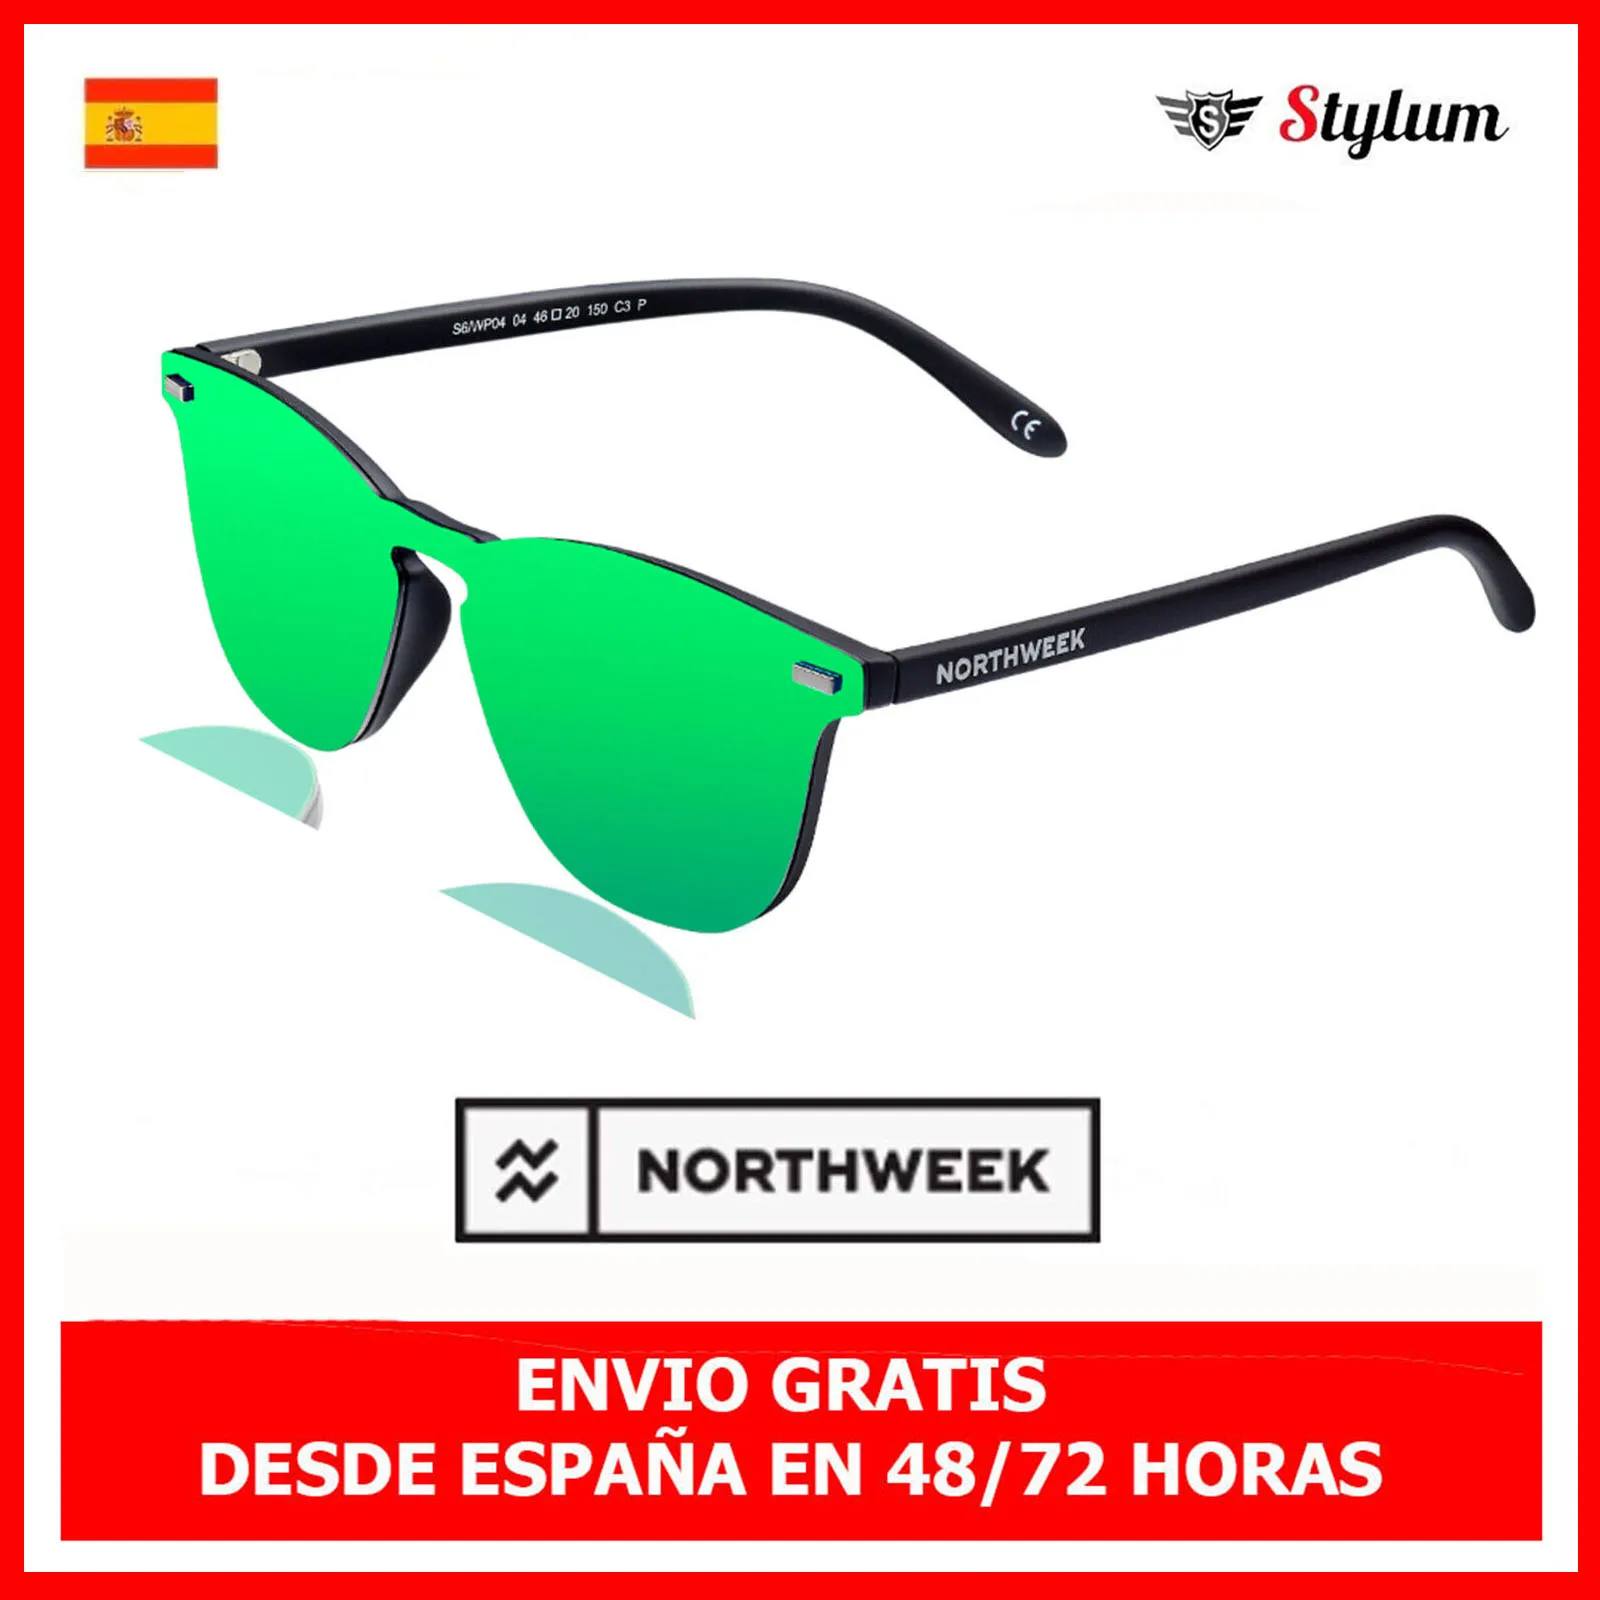 NORTHWEEK Unisex Adults’ Regular Phantom Venice Sunglasses 140.0 Green 